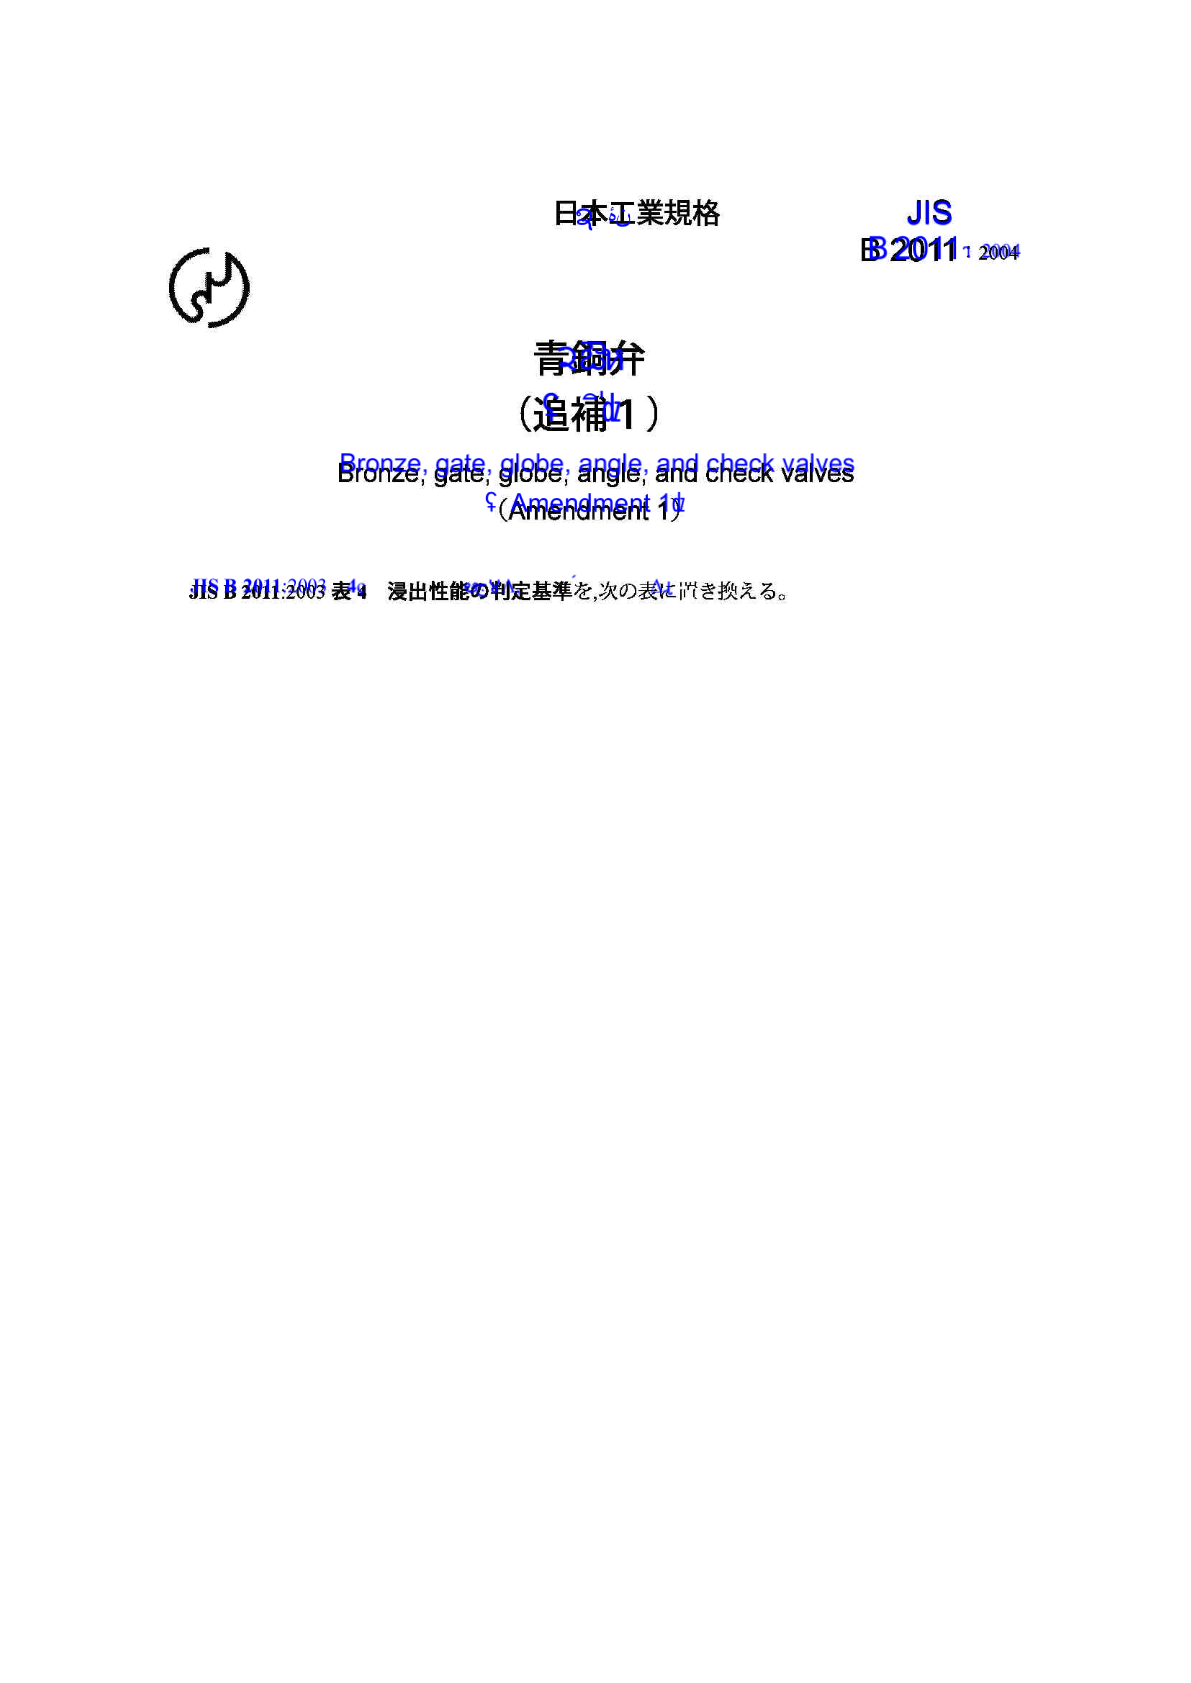 JIS日本标准jis b2011-2004 bronze, gate, globe, angle, and check valves(amendment 1)-图一